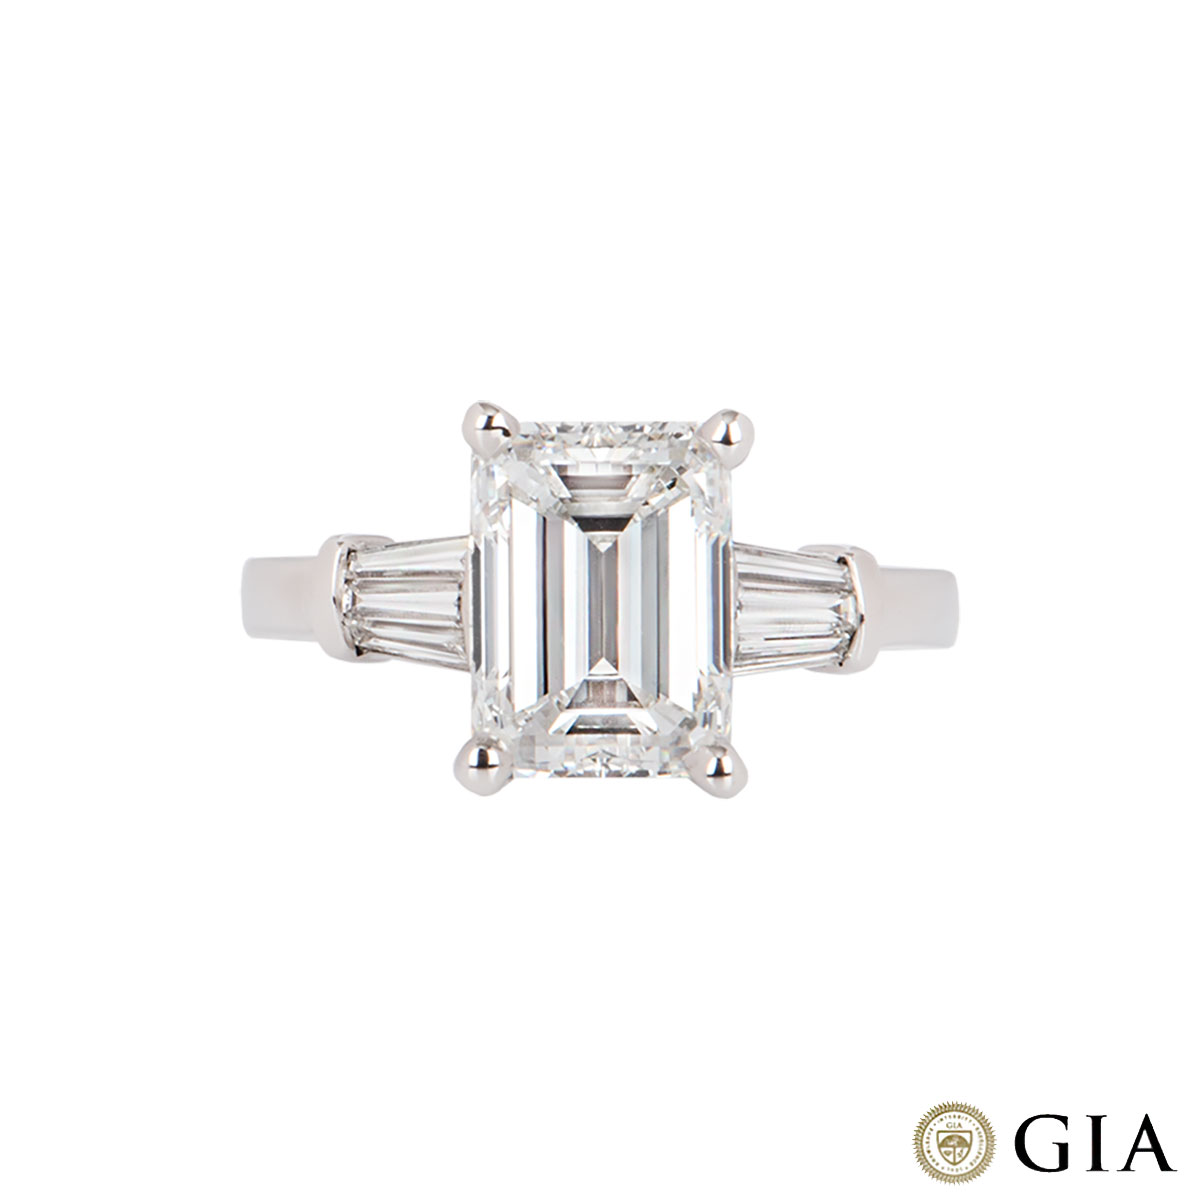 White Gold Emerald Cut Diamond Ring 3.02ct G/VVS2